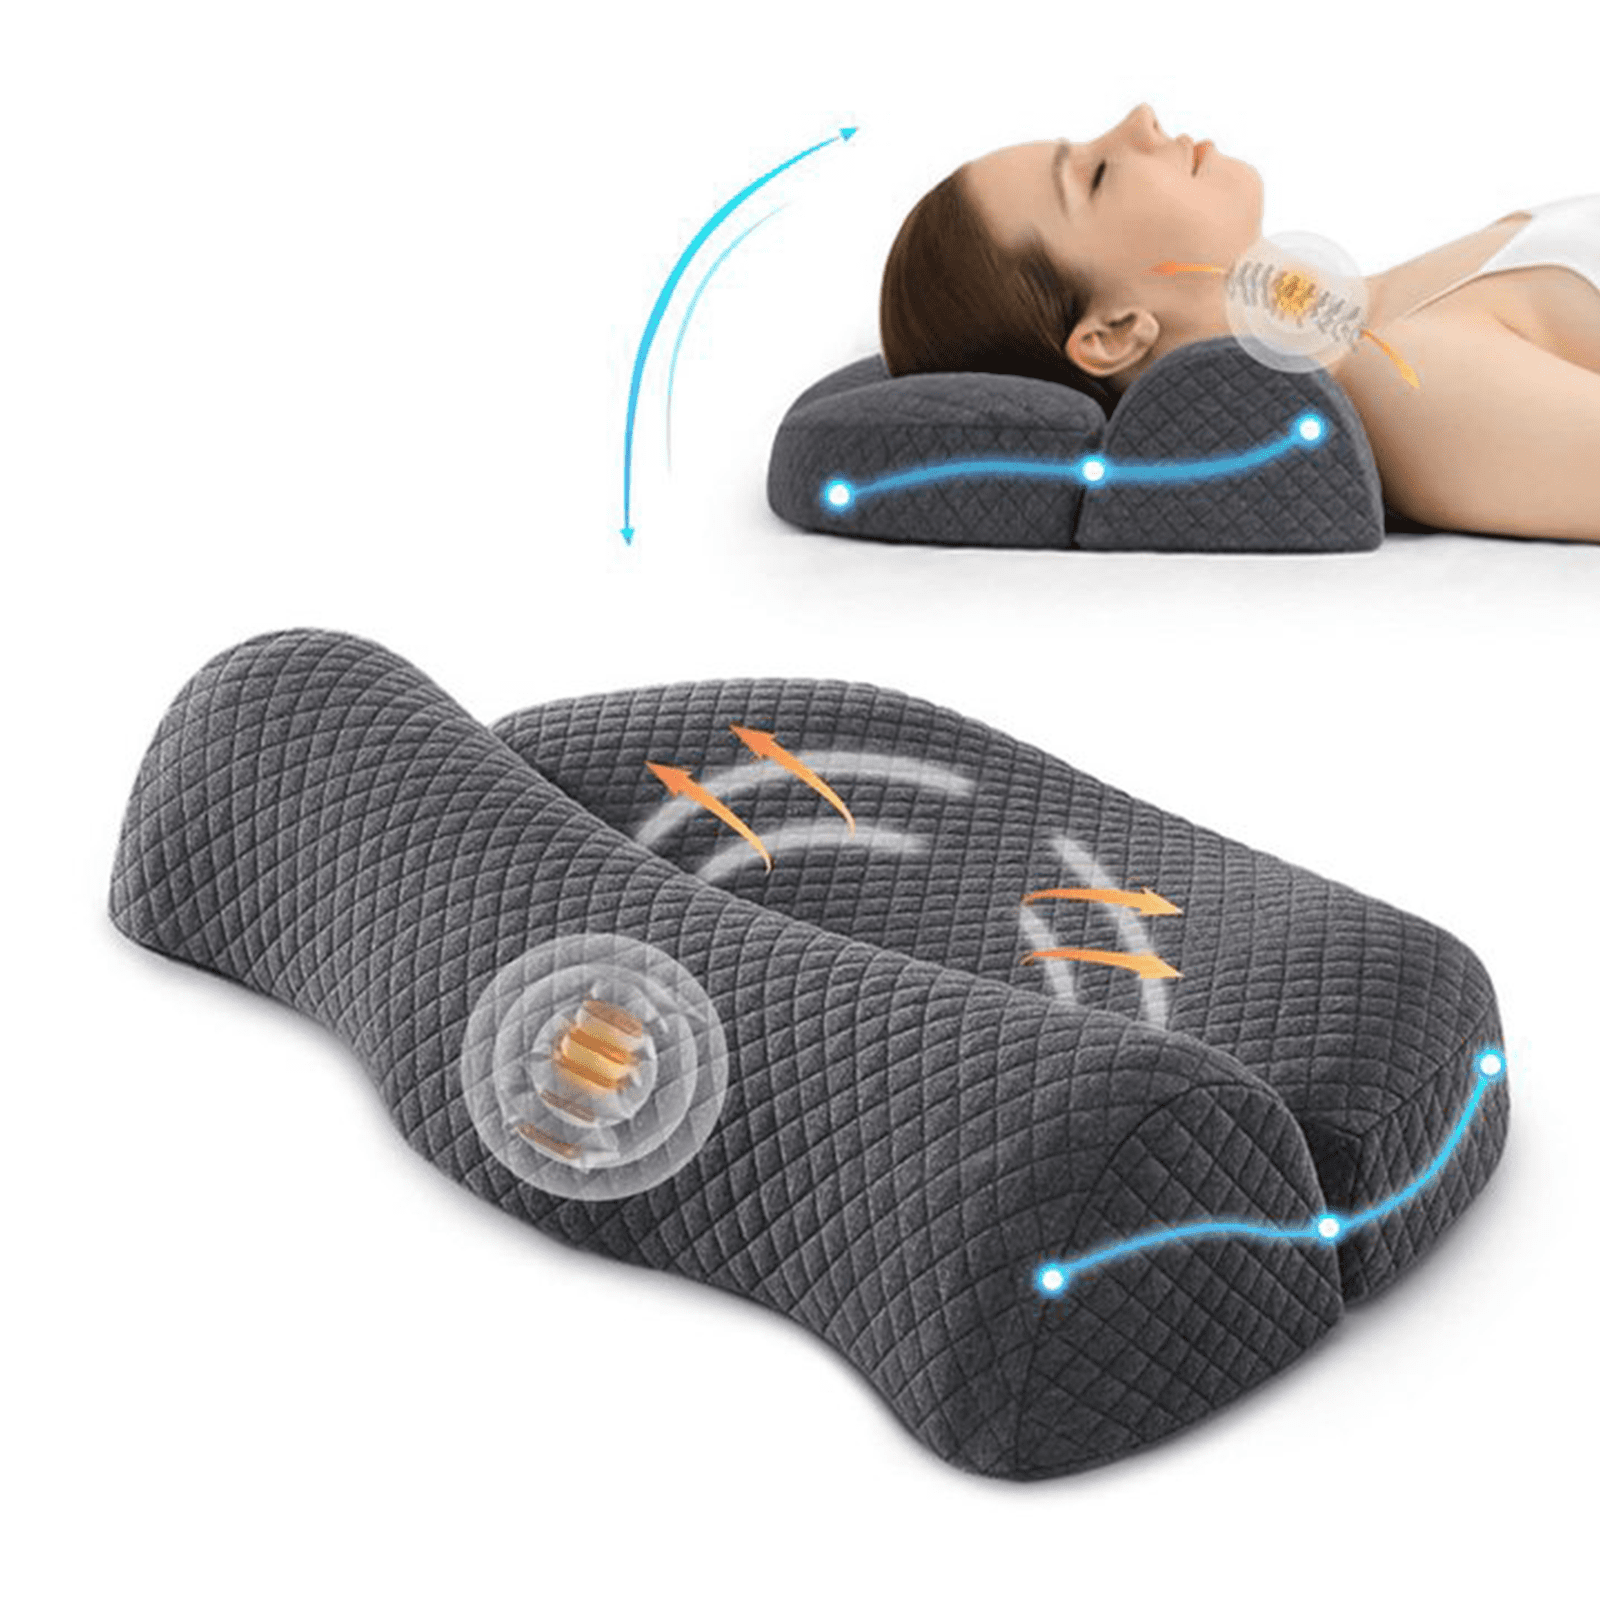 Lillyzen Donut Pillow for Tailbone Pain Relief Memory Foam Cushion  Orthopedic Seat Pressure Relief Sitting Coccyx Sciatica Hemorrhoid  Pregnancy